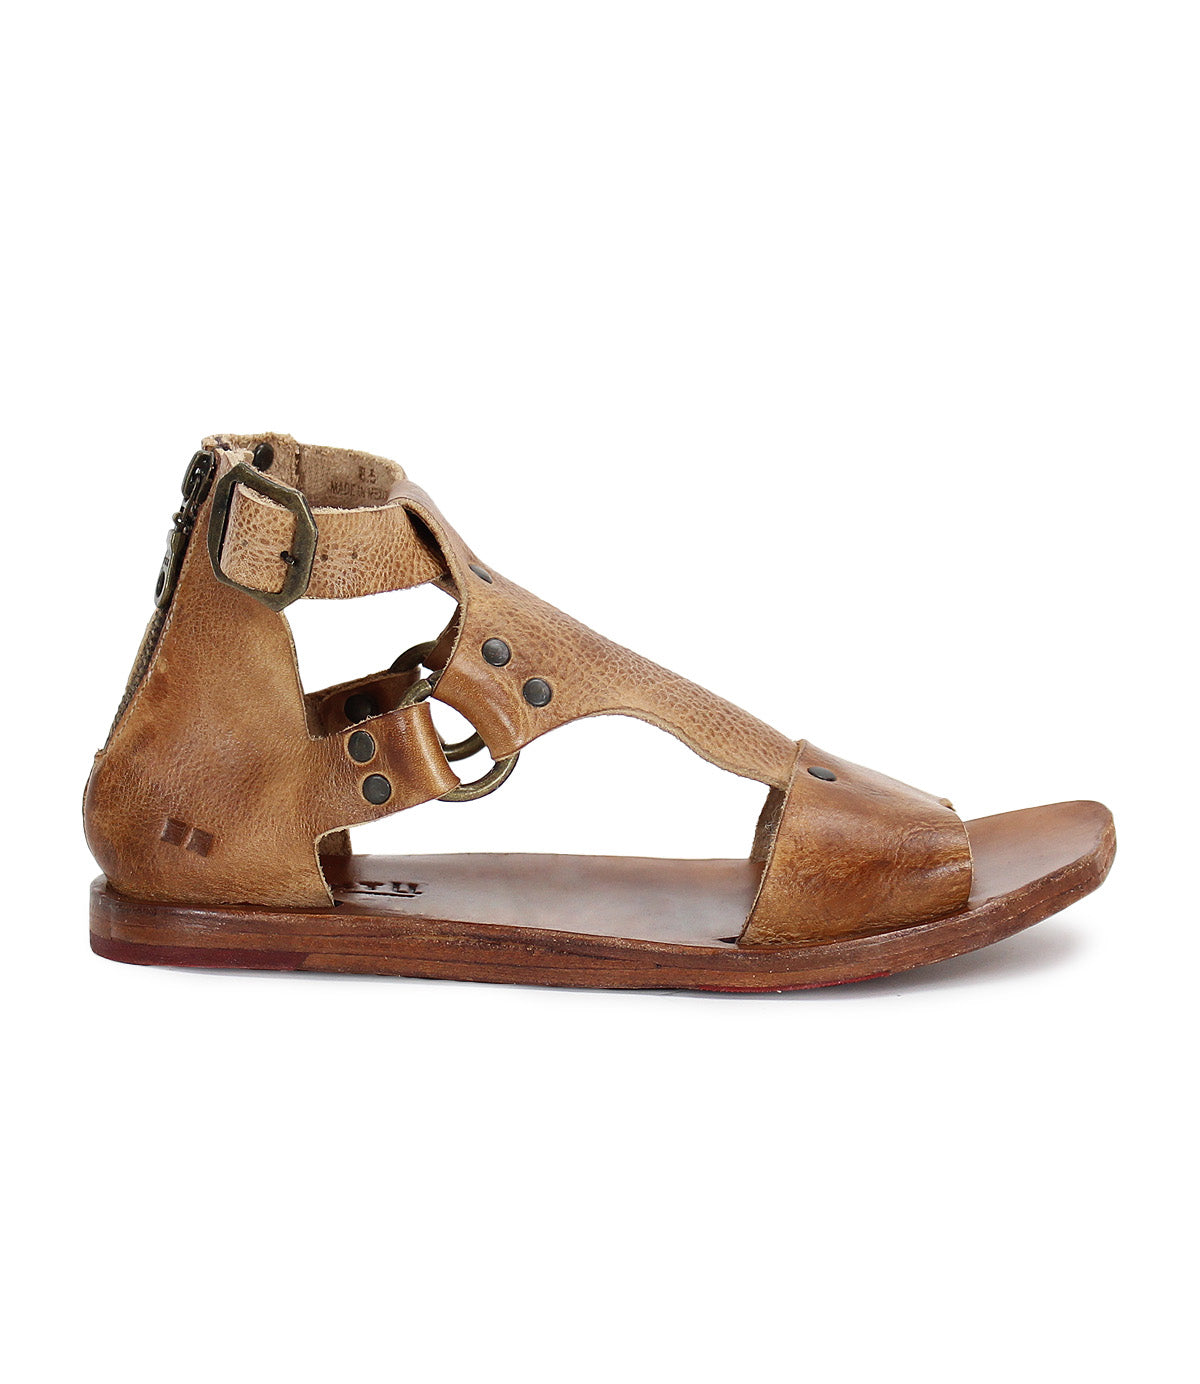 A pair of Bed Stu Voleta women's sandals in tan leather.